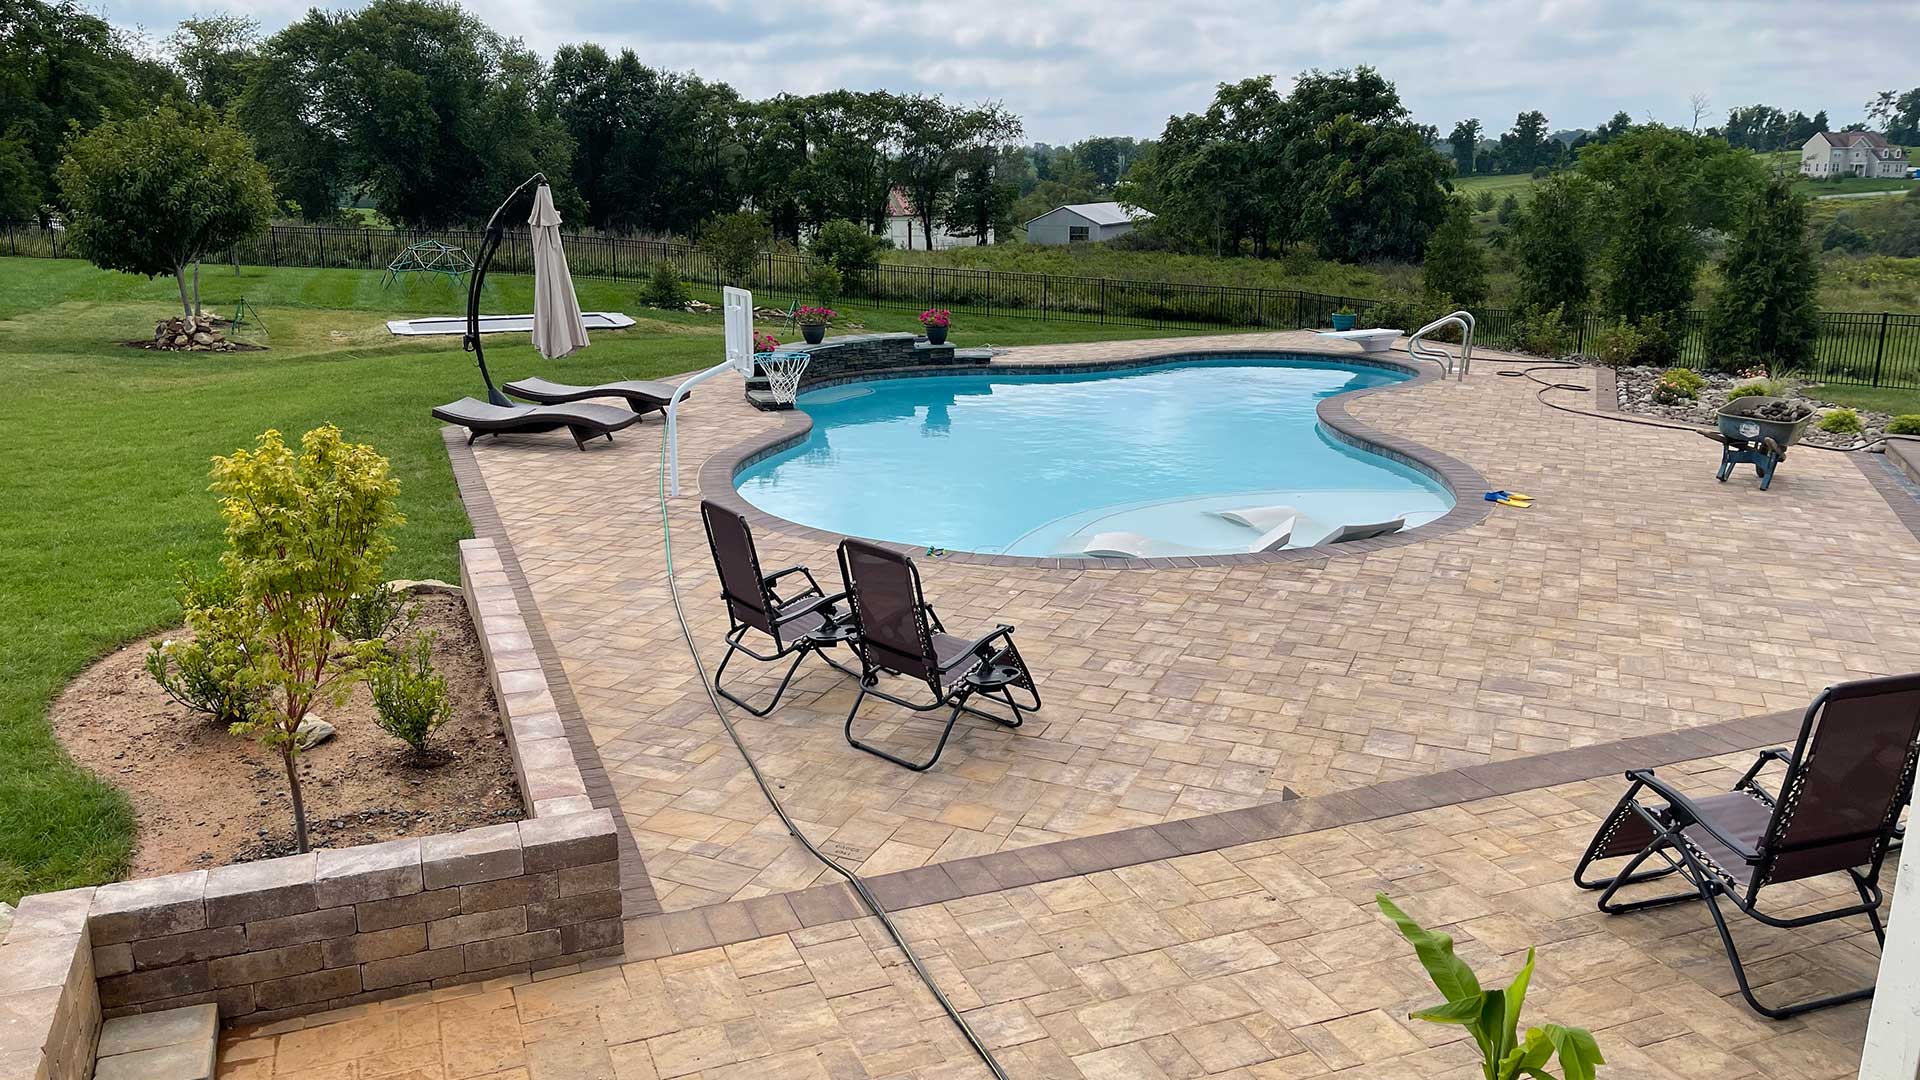 Large custom patio around a pool near Purcellville, VA.